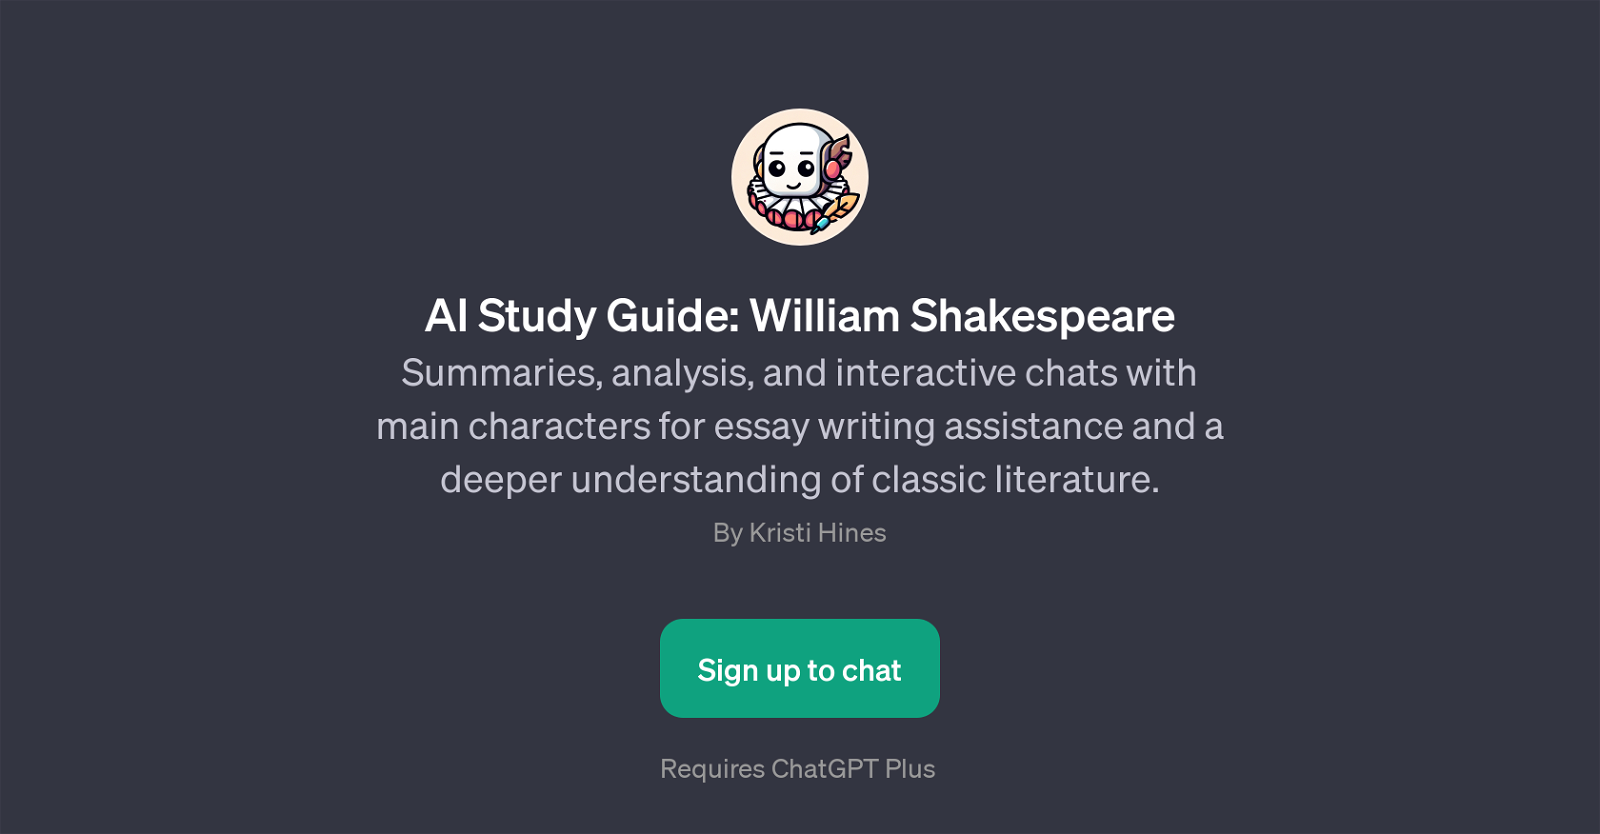 AI Study Guide: William Shakespeare website